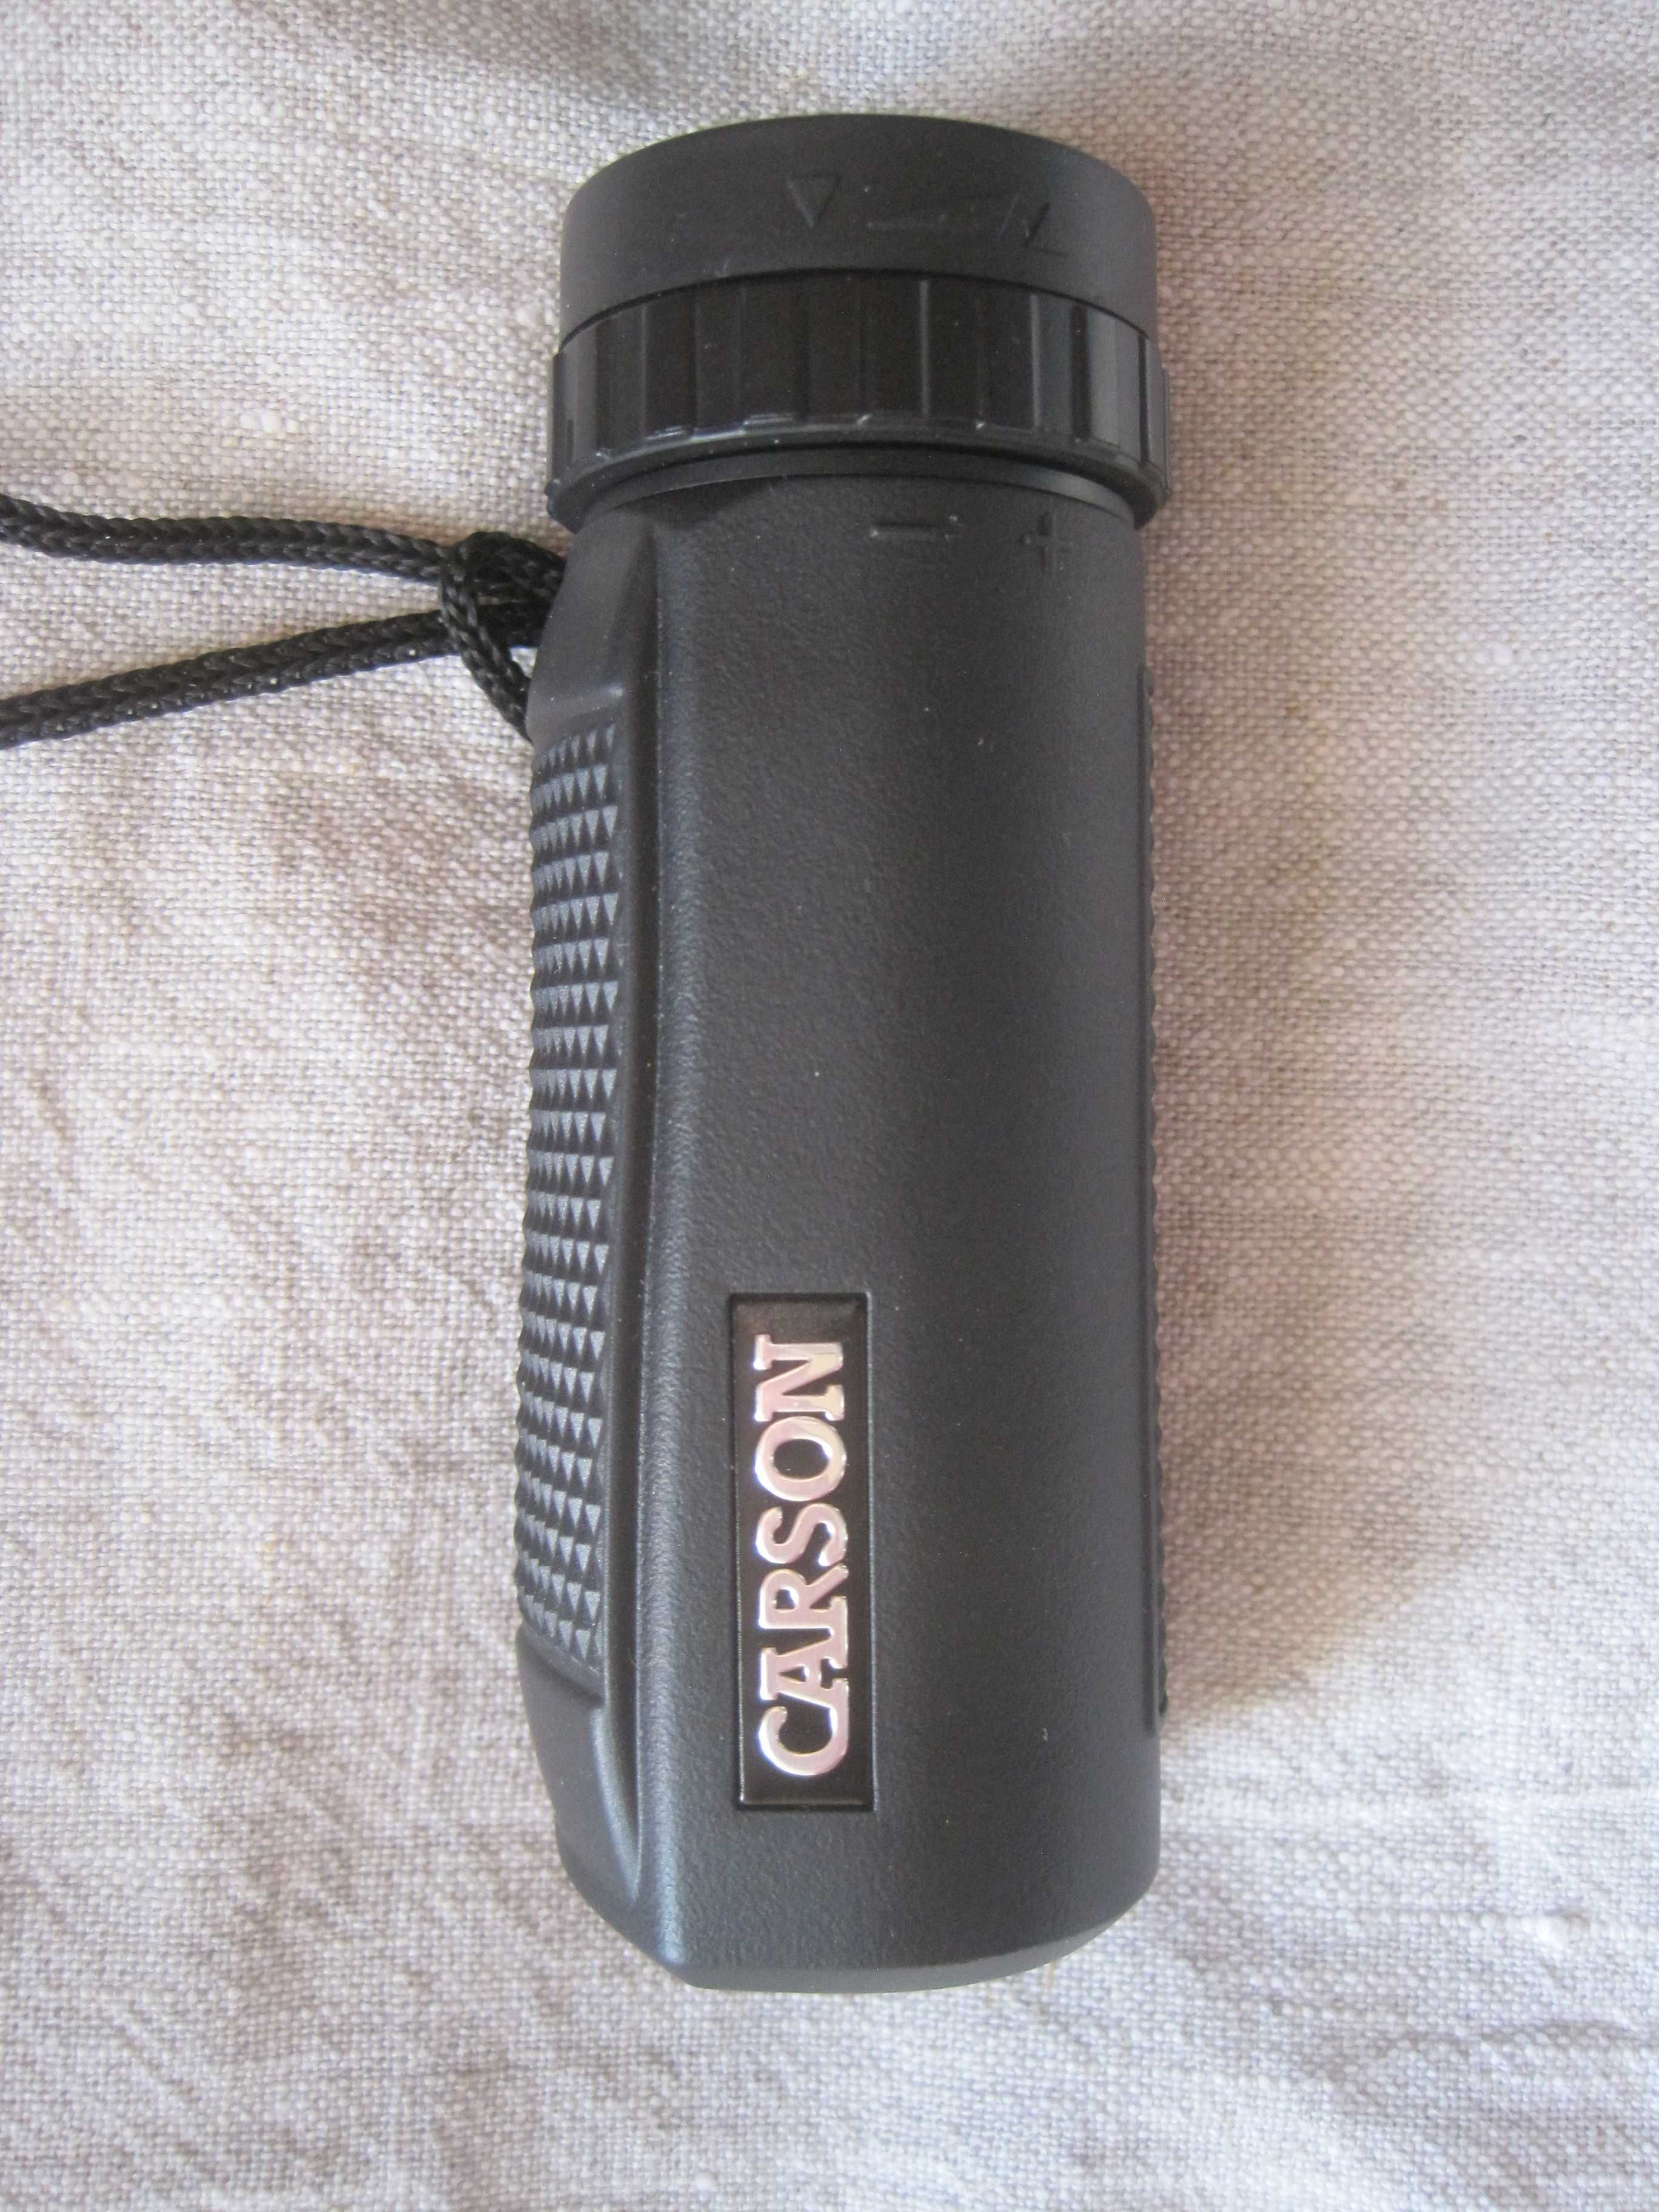 Monocular Carson BlackWave, 10x25 mm, Waterproof